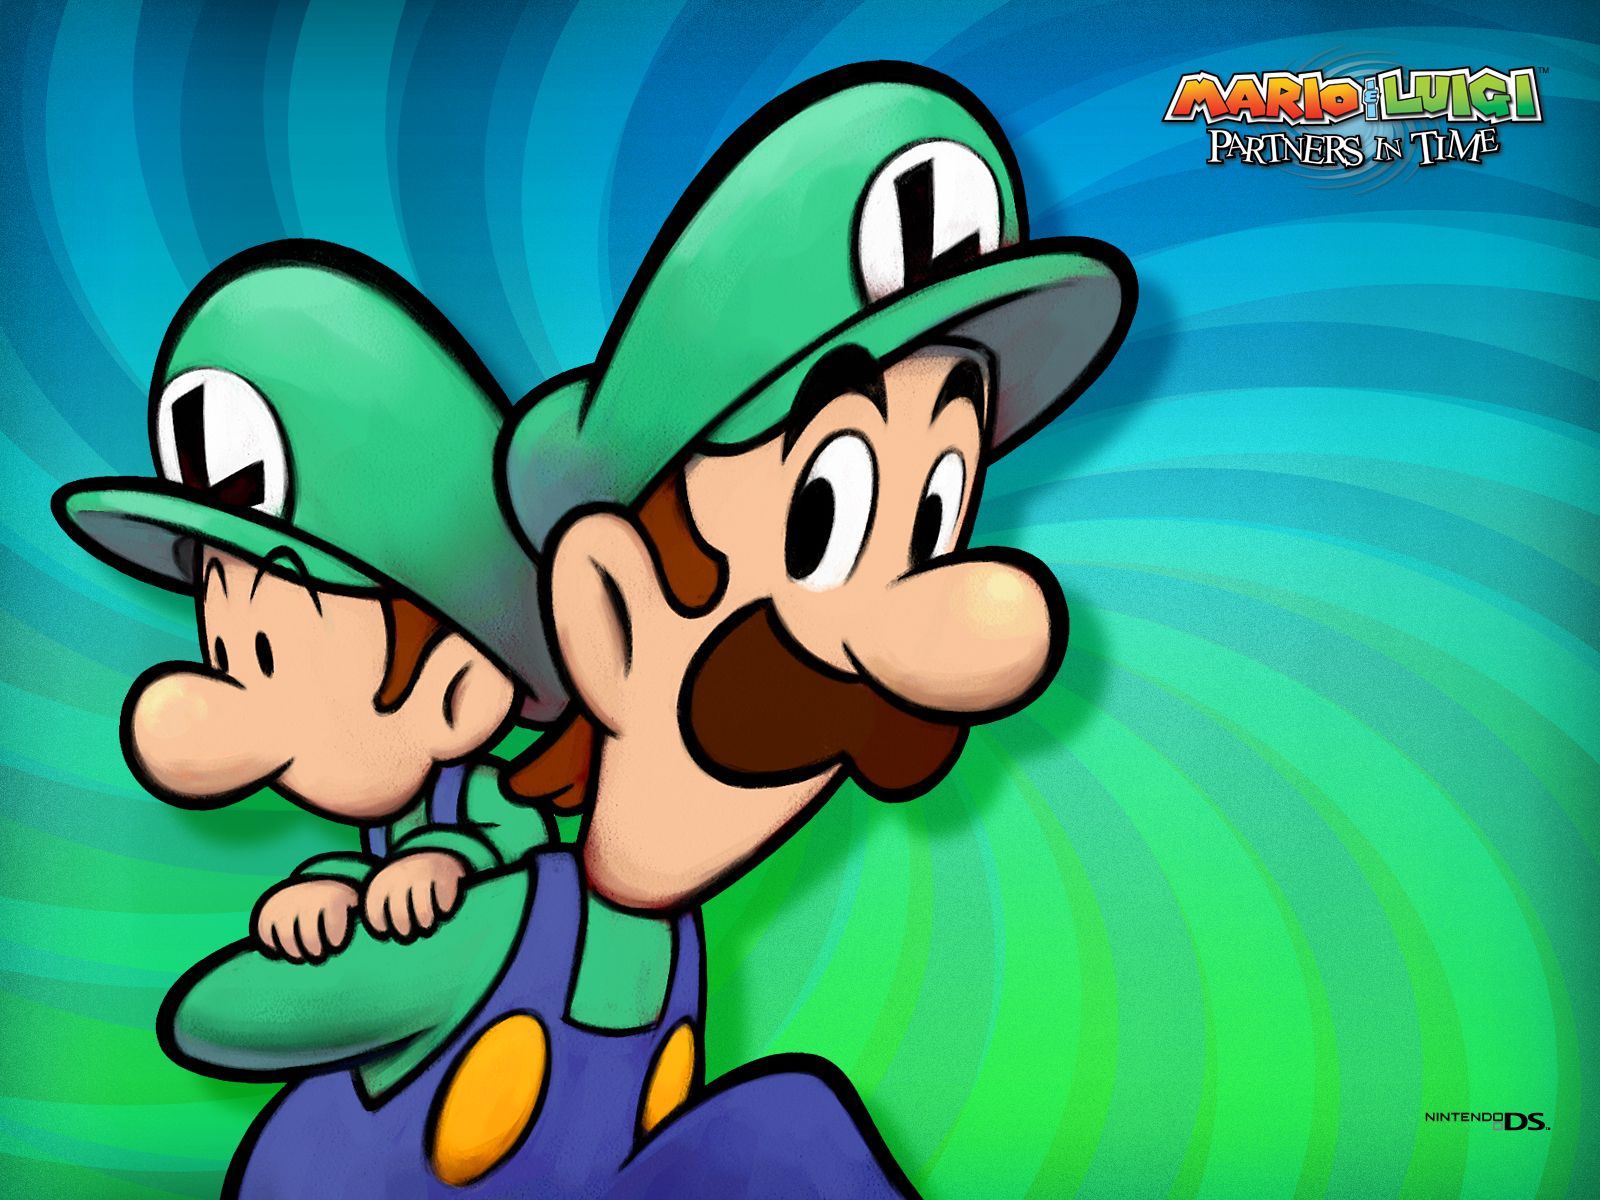 TMK. Downloads. Image. Wallpaper. Mario & Luigi: Partners